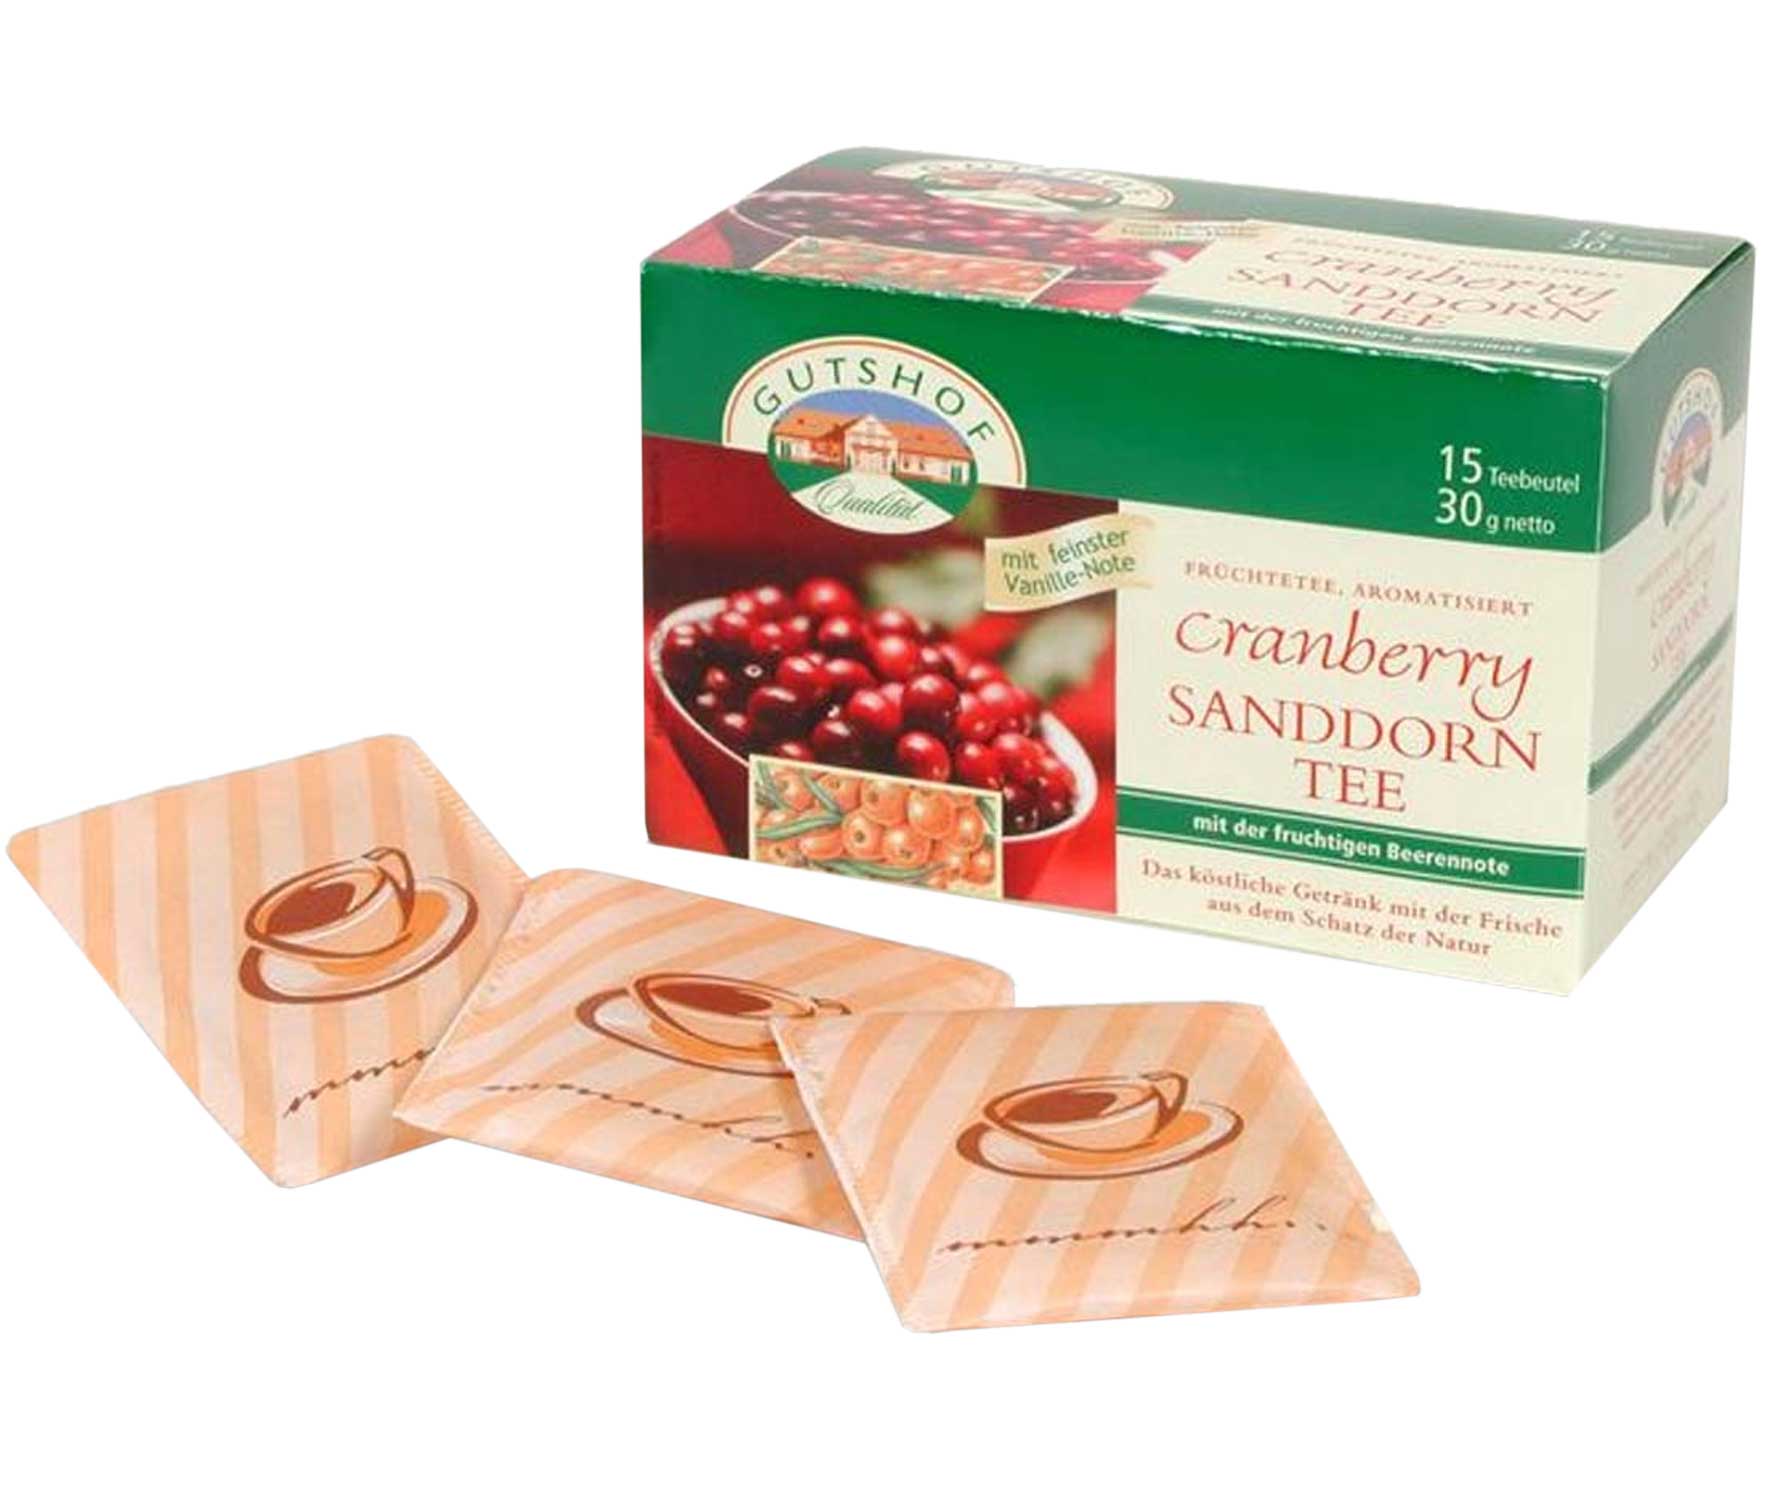 Avita Cranberry Sanddorn Tee (15 Teebeutel)